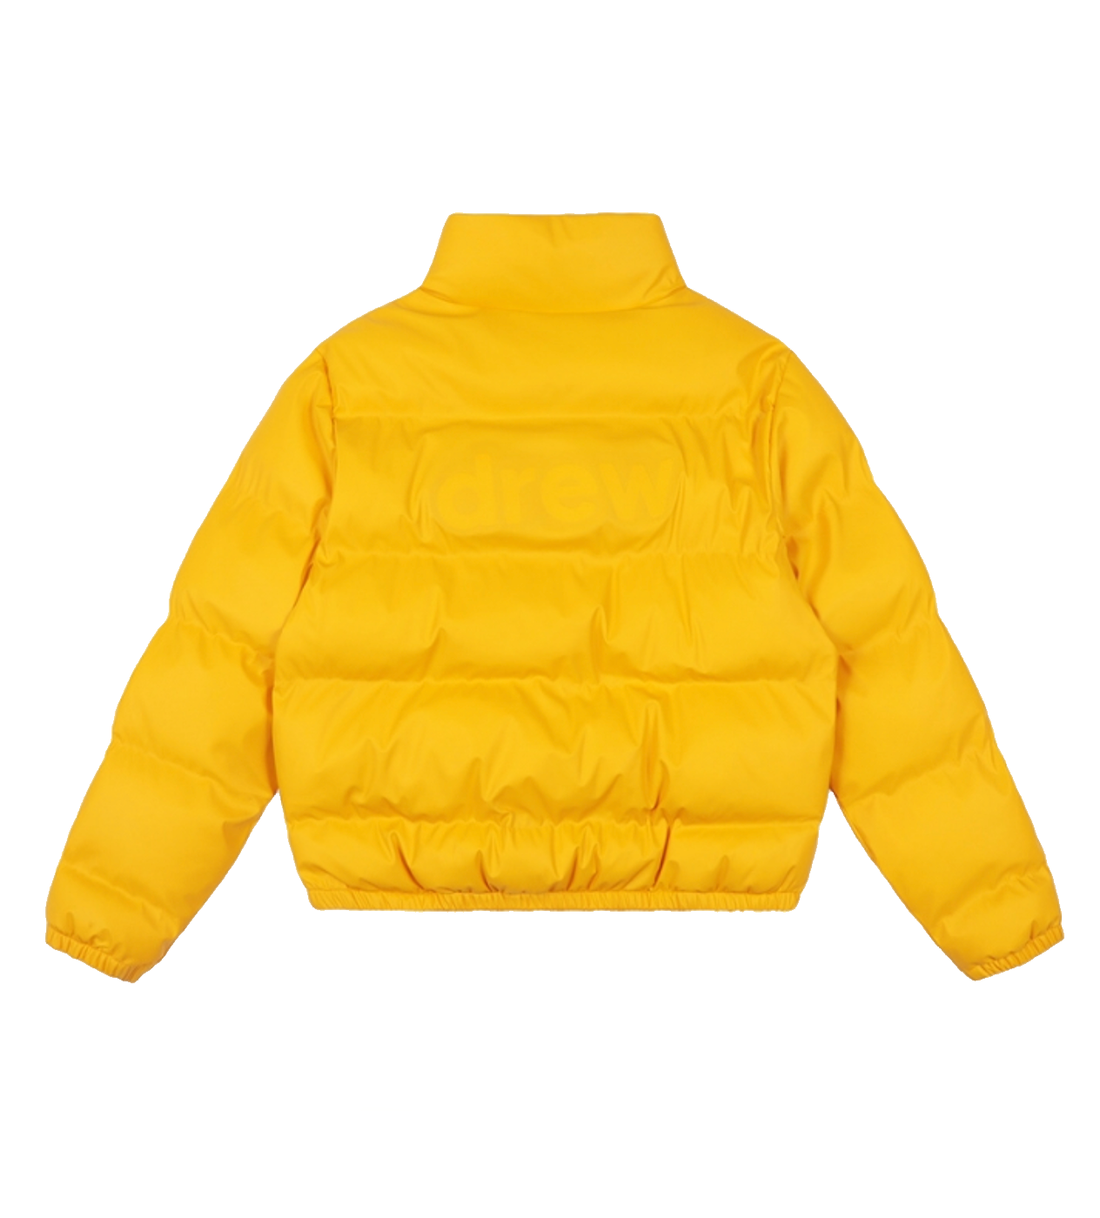 Drew House Yellow Puffer Jacket